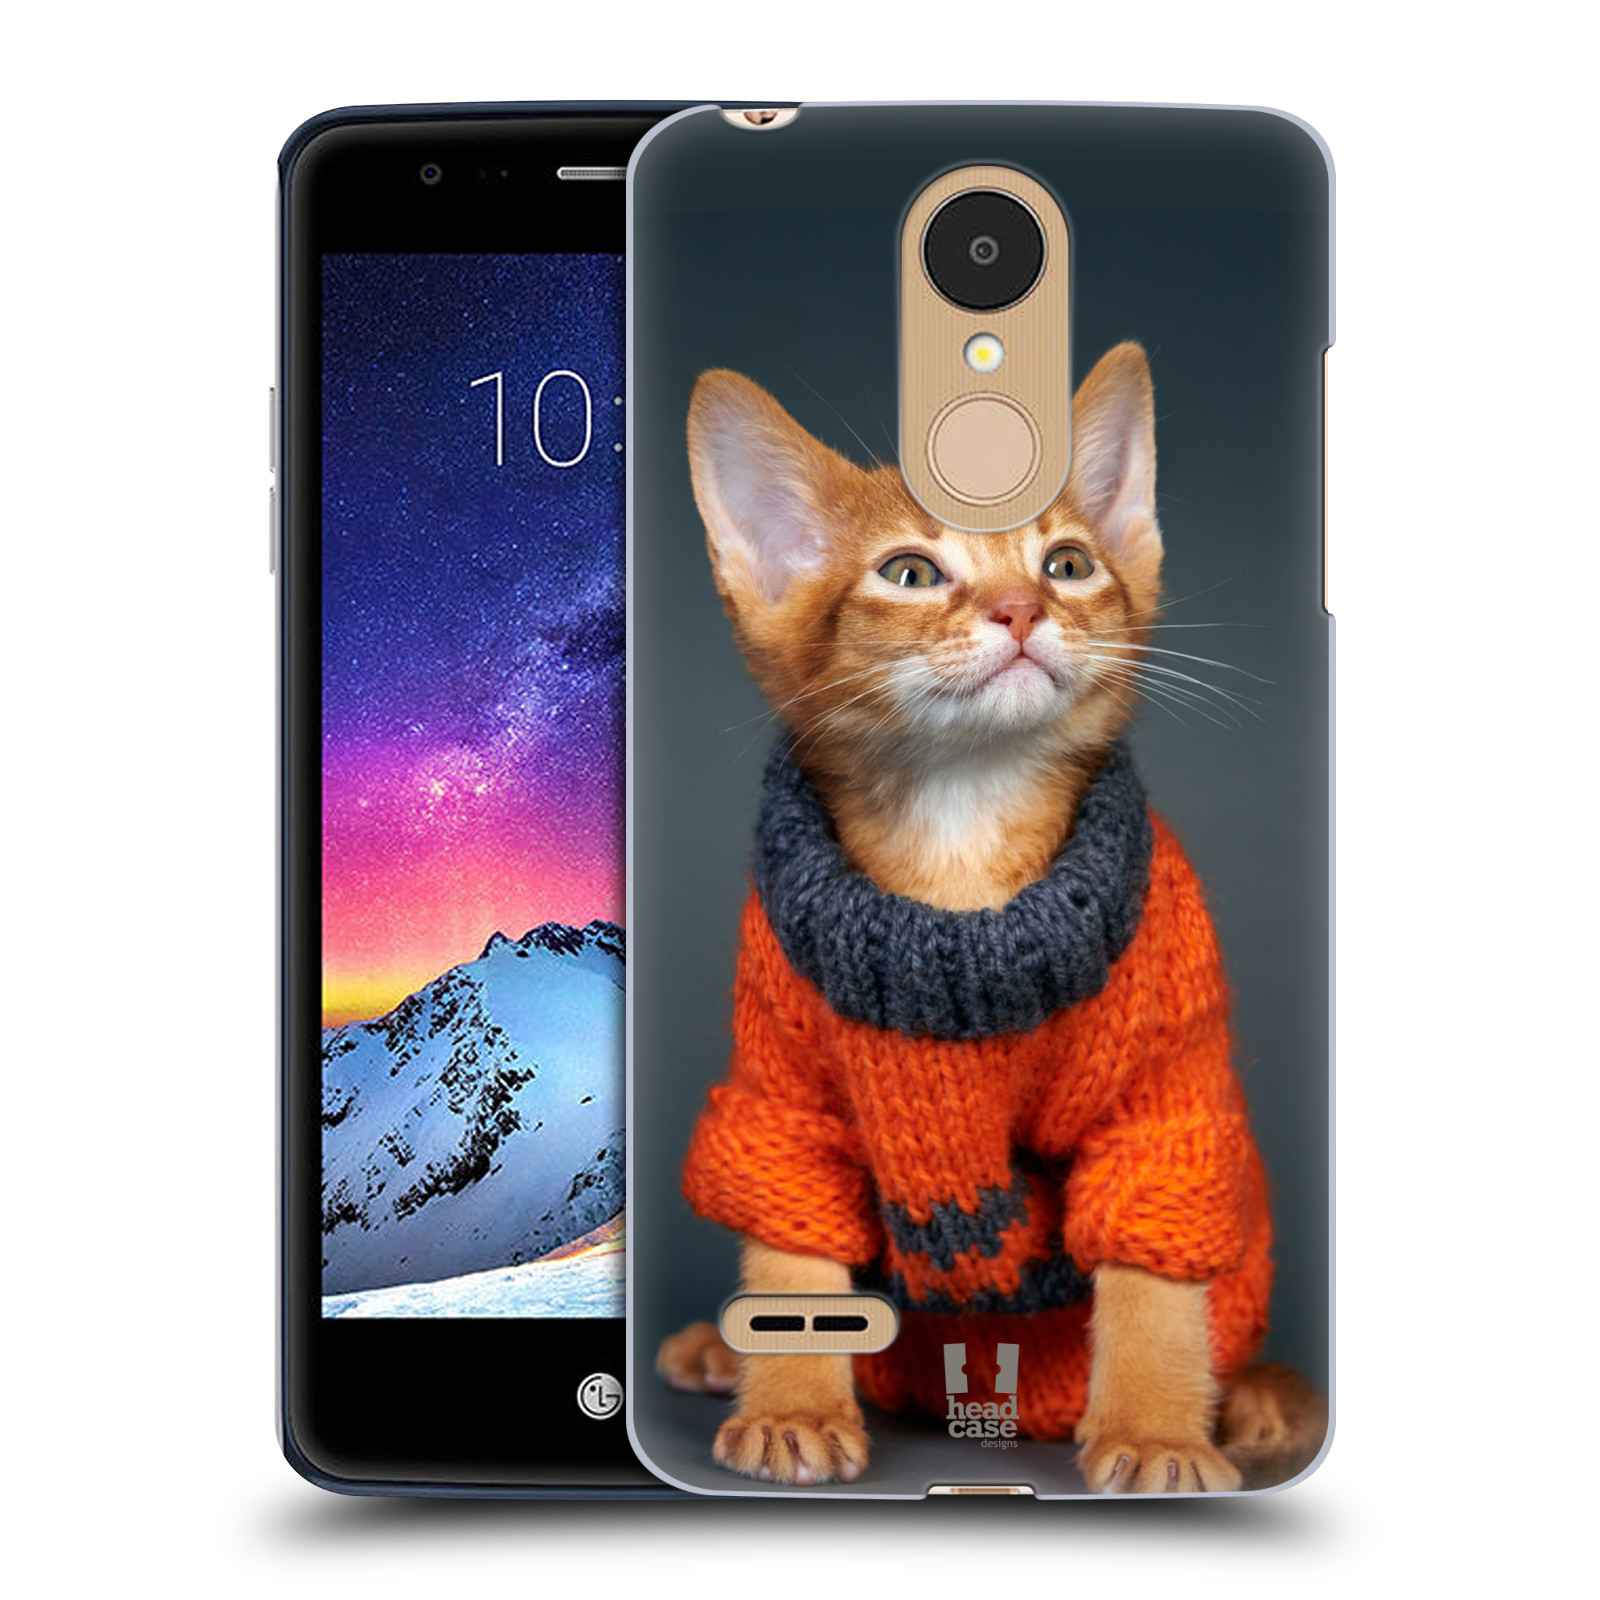 HEAD CASE plastový obal na mobil LG K9 / K8 2018 vzor Legrační zvířátka kočička v oranžovém svetru